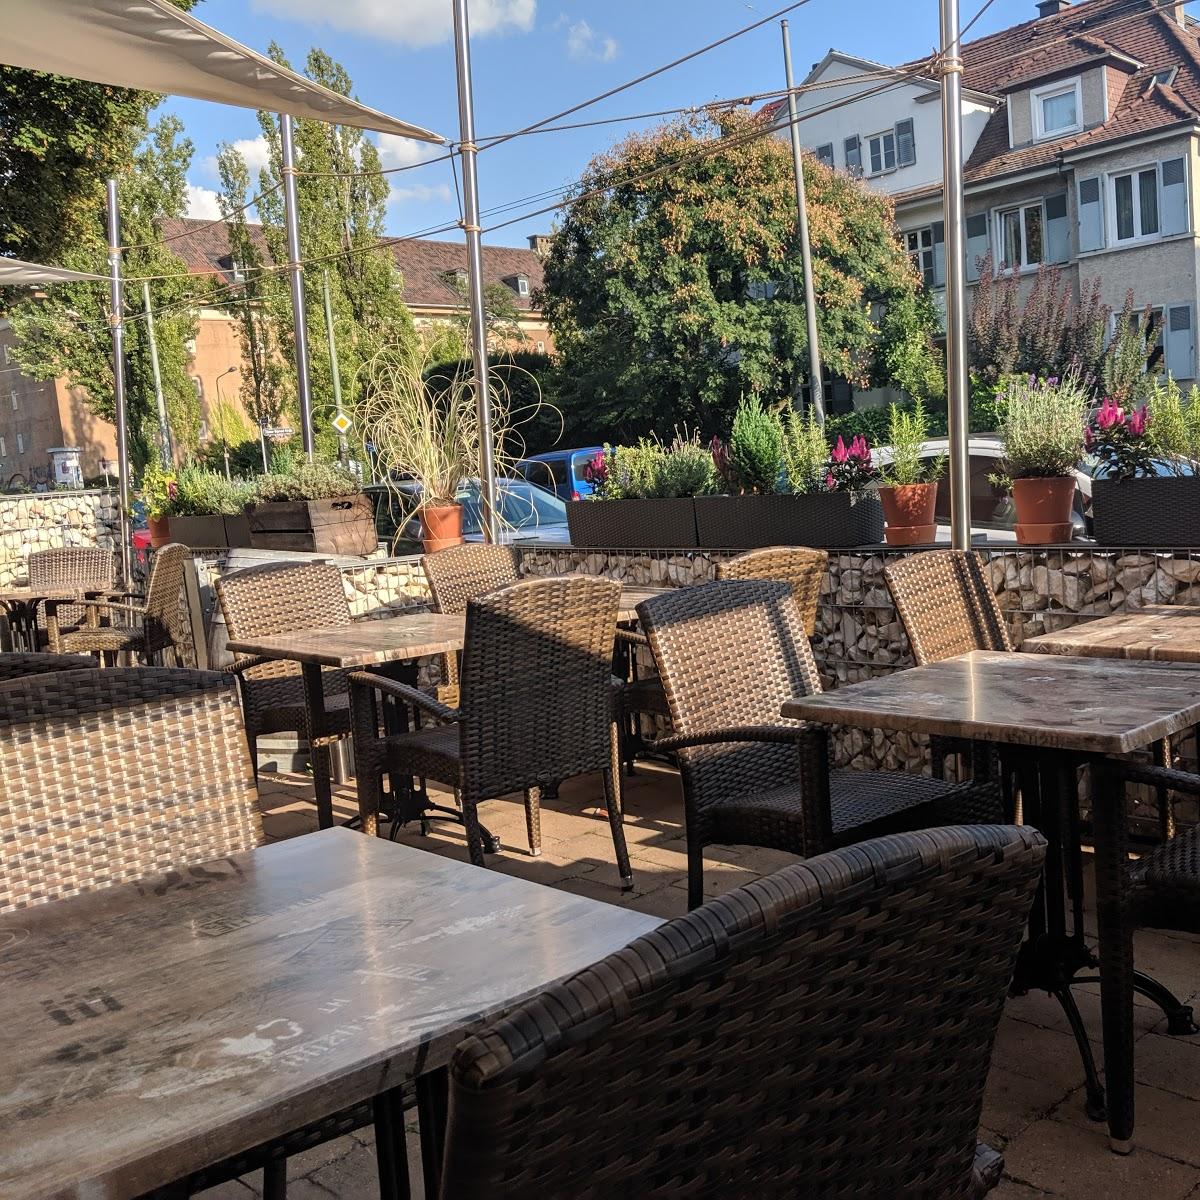 Restaurant "Trattoria Di Liberto" in Frankfurt am Main